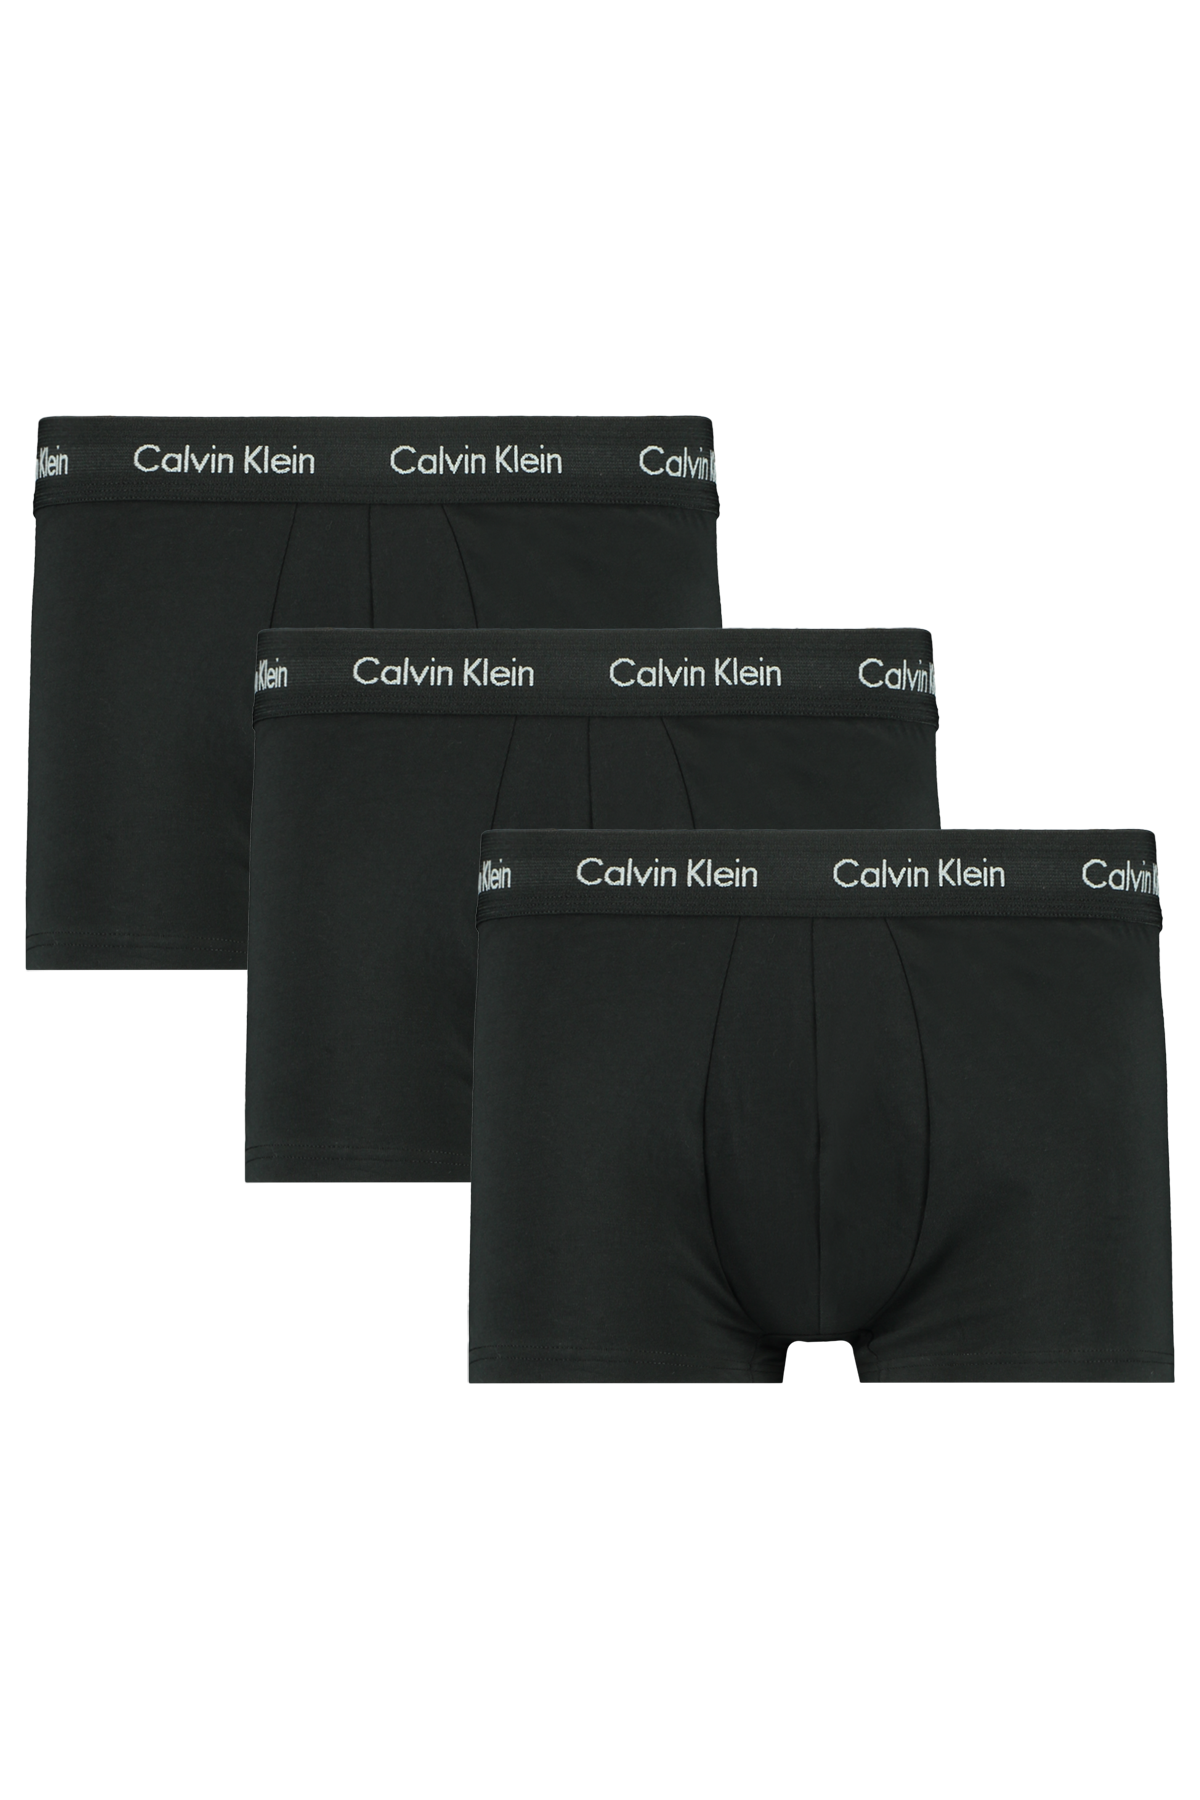 vervolgens Festival herfst Heren Boxershort Calvin Klein 3P LOW RISE Black